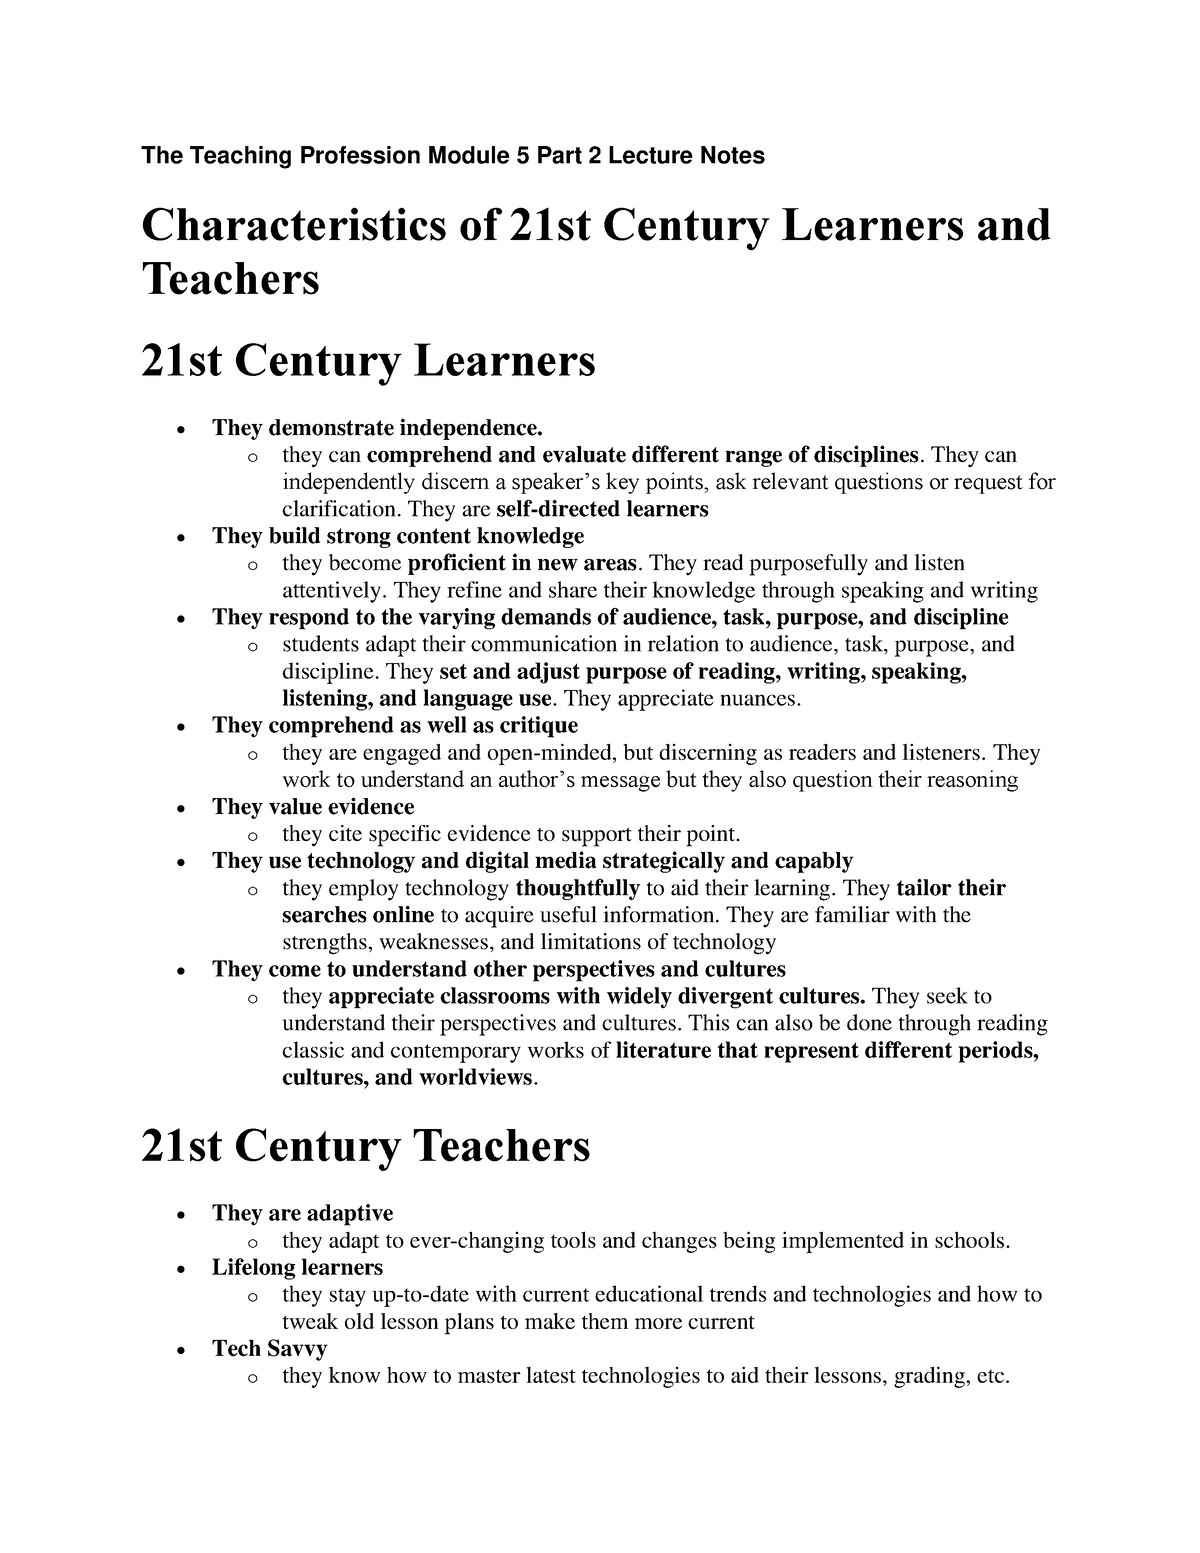 characteristics of 21st century learners essay